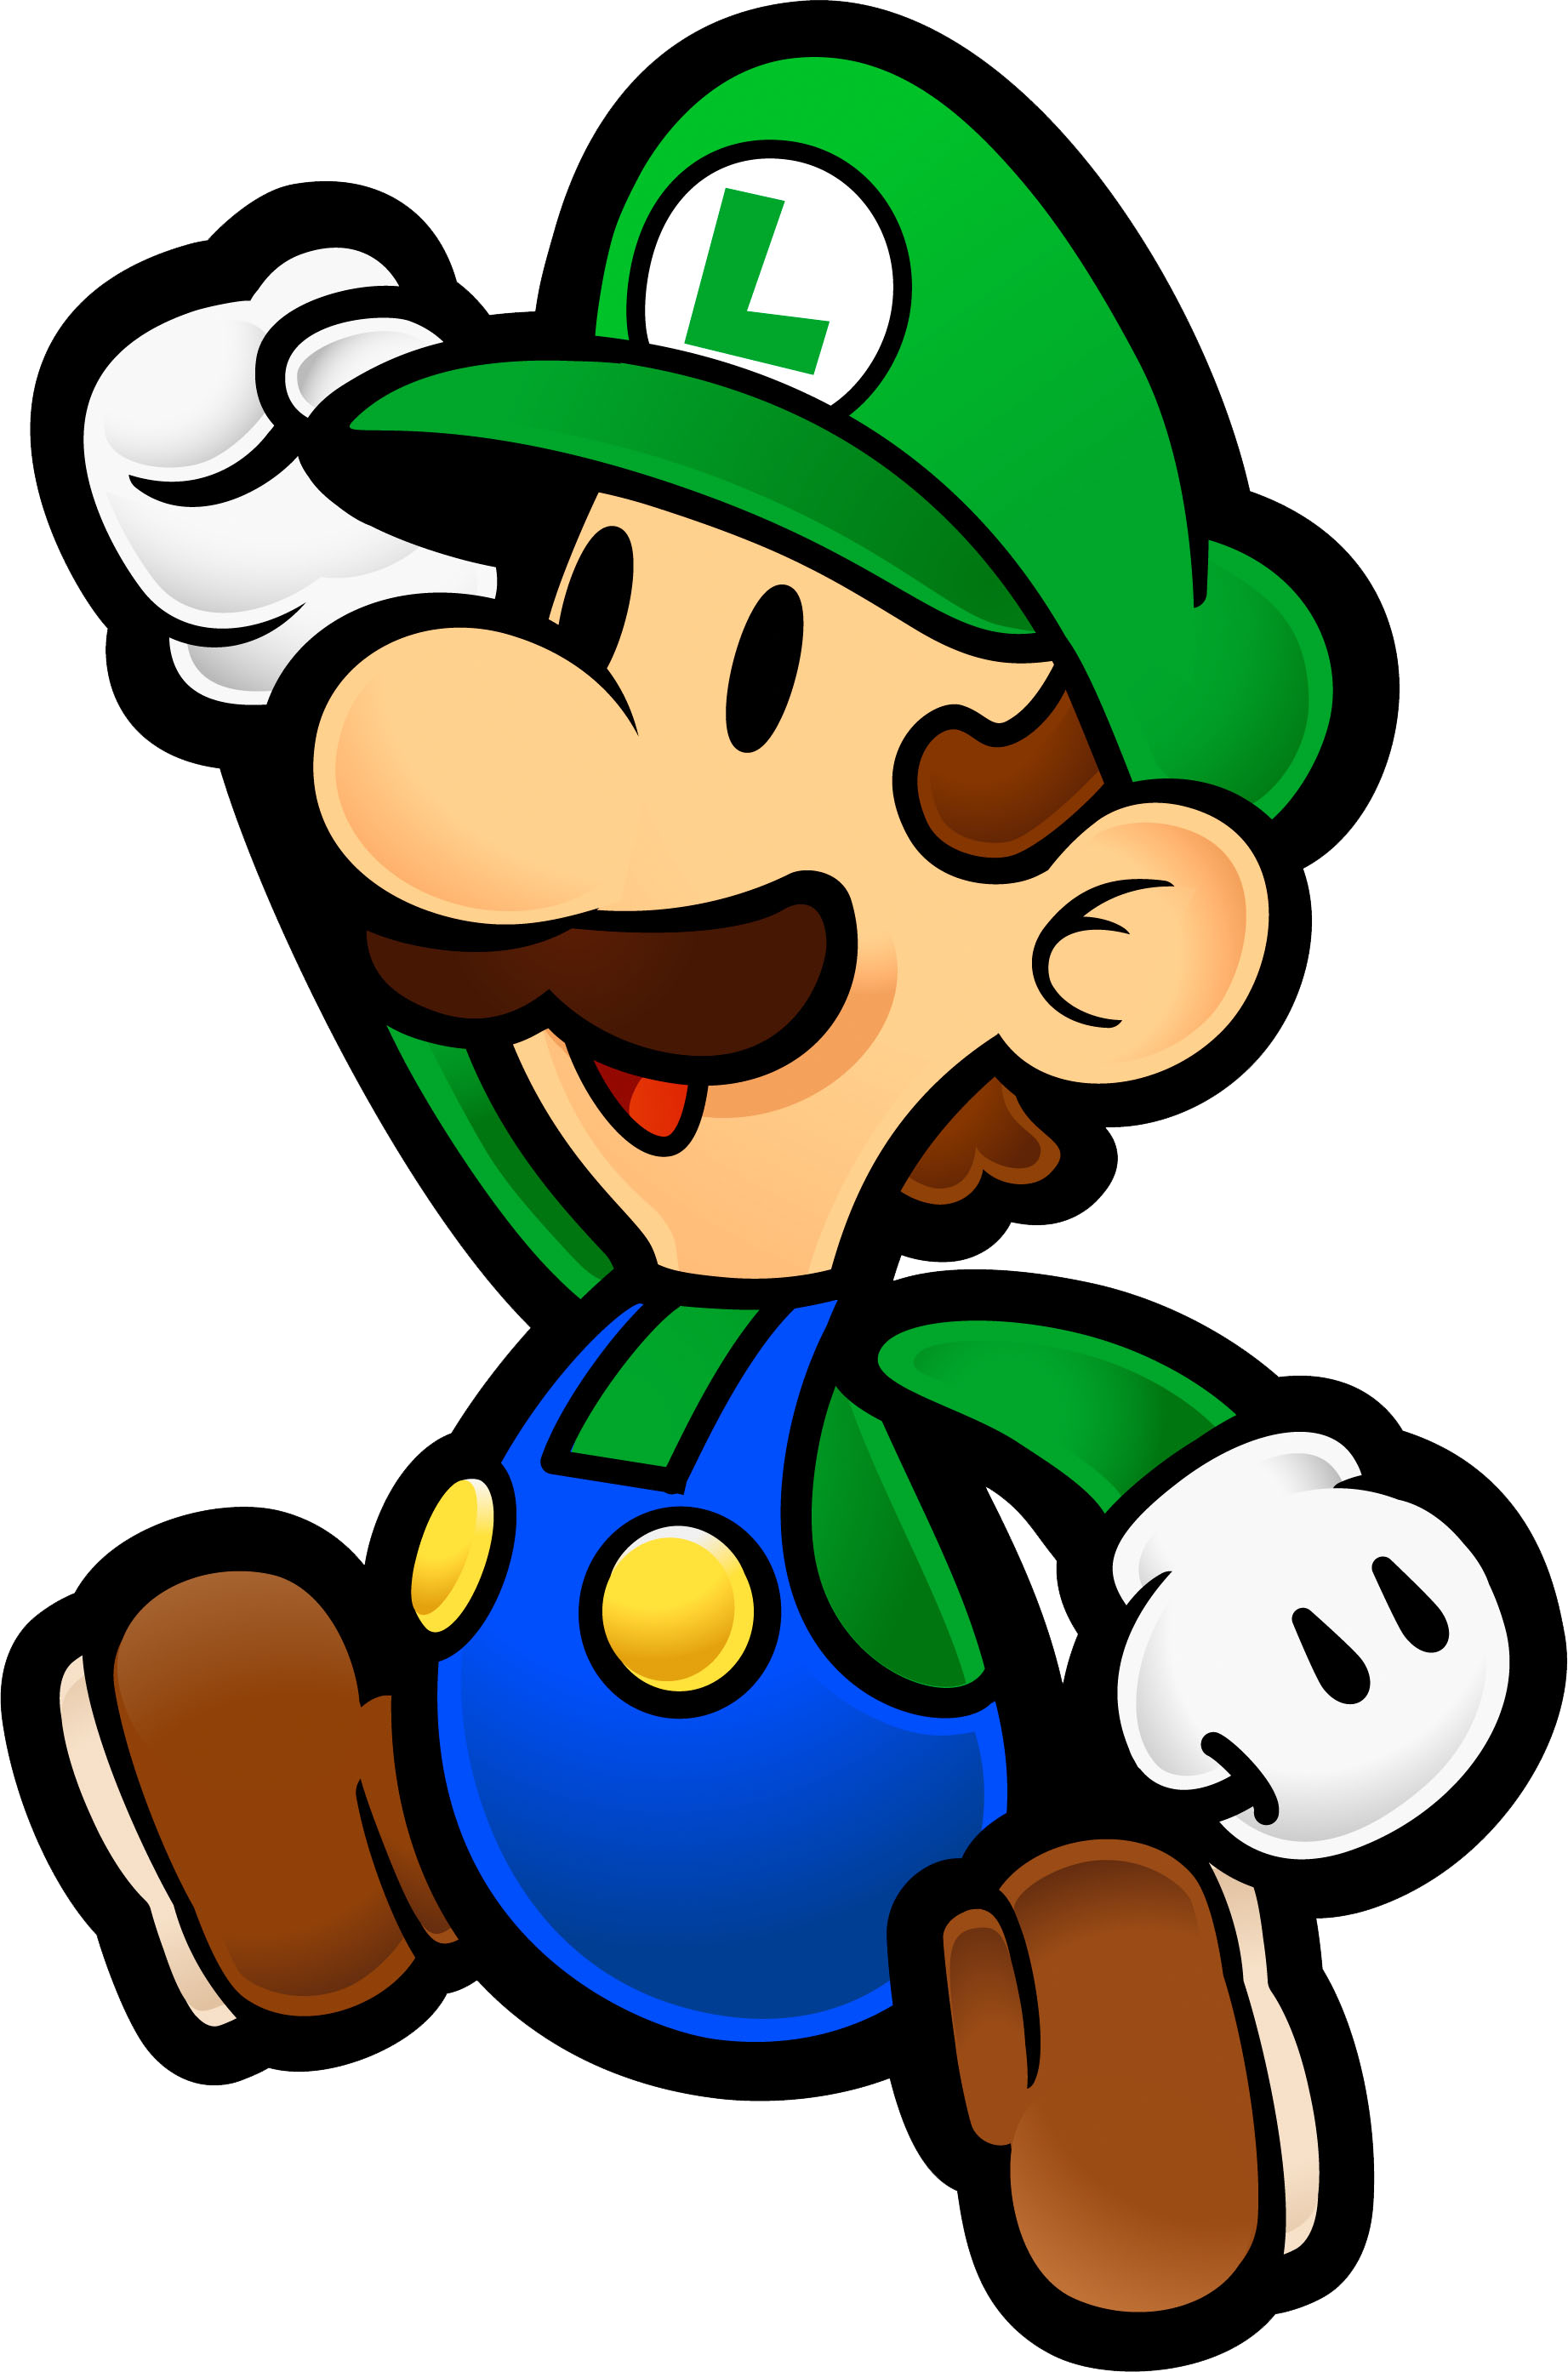 Luigi (Canon)/JCDenton2051, Character Stats and Profiles Wiki